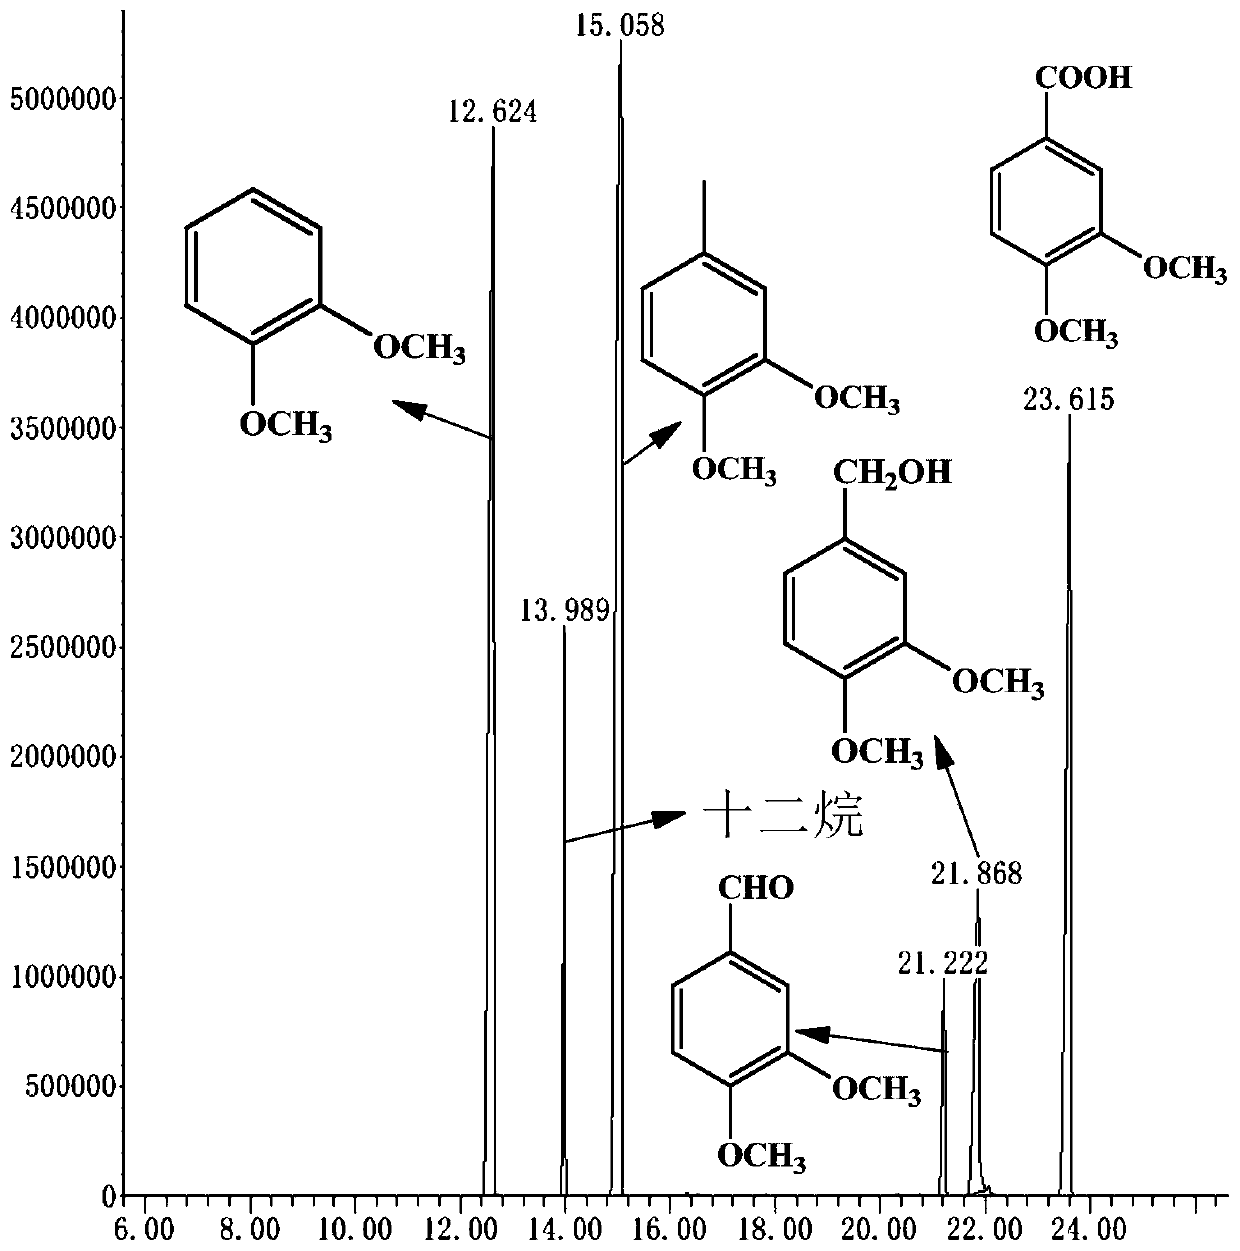 Method for catalyzing veratryl alcohol to convert into 3,4-dimethoxytoluene